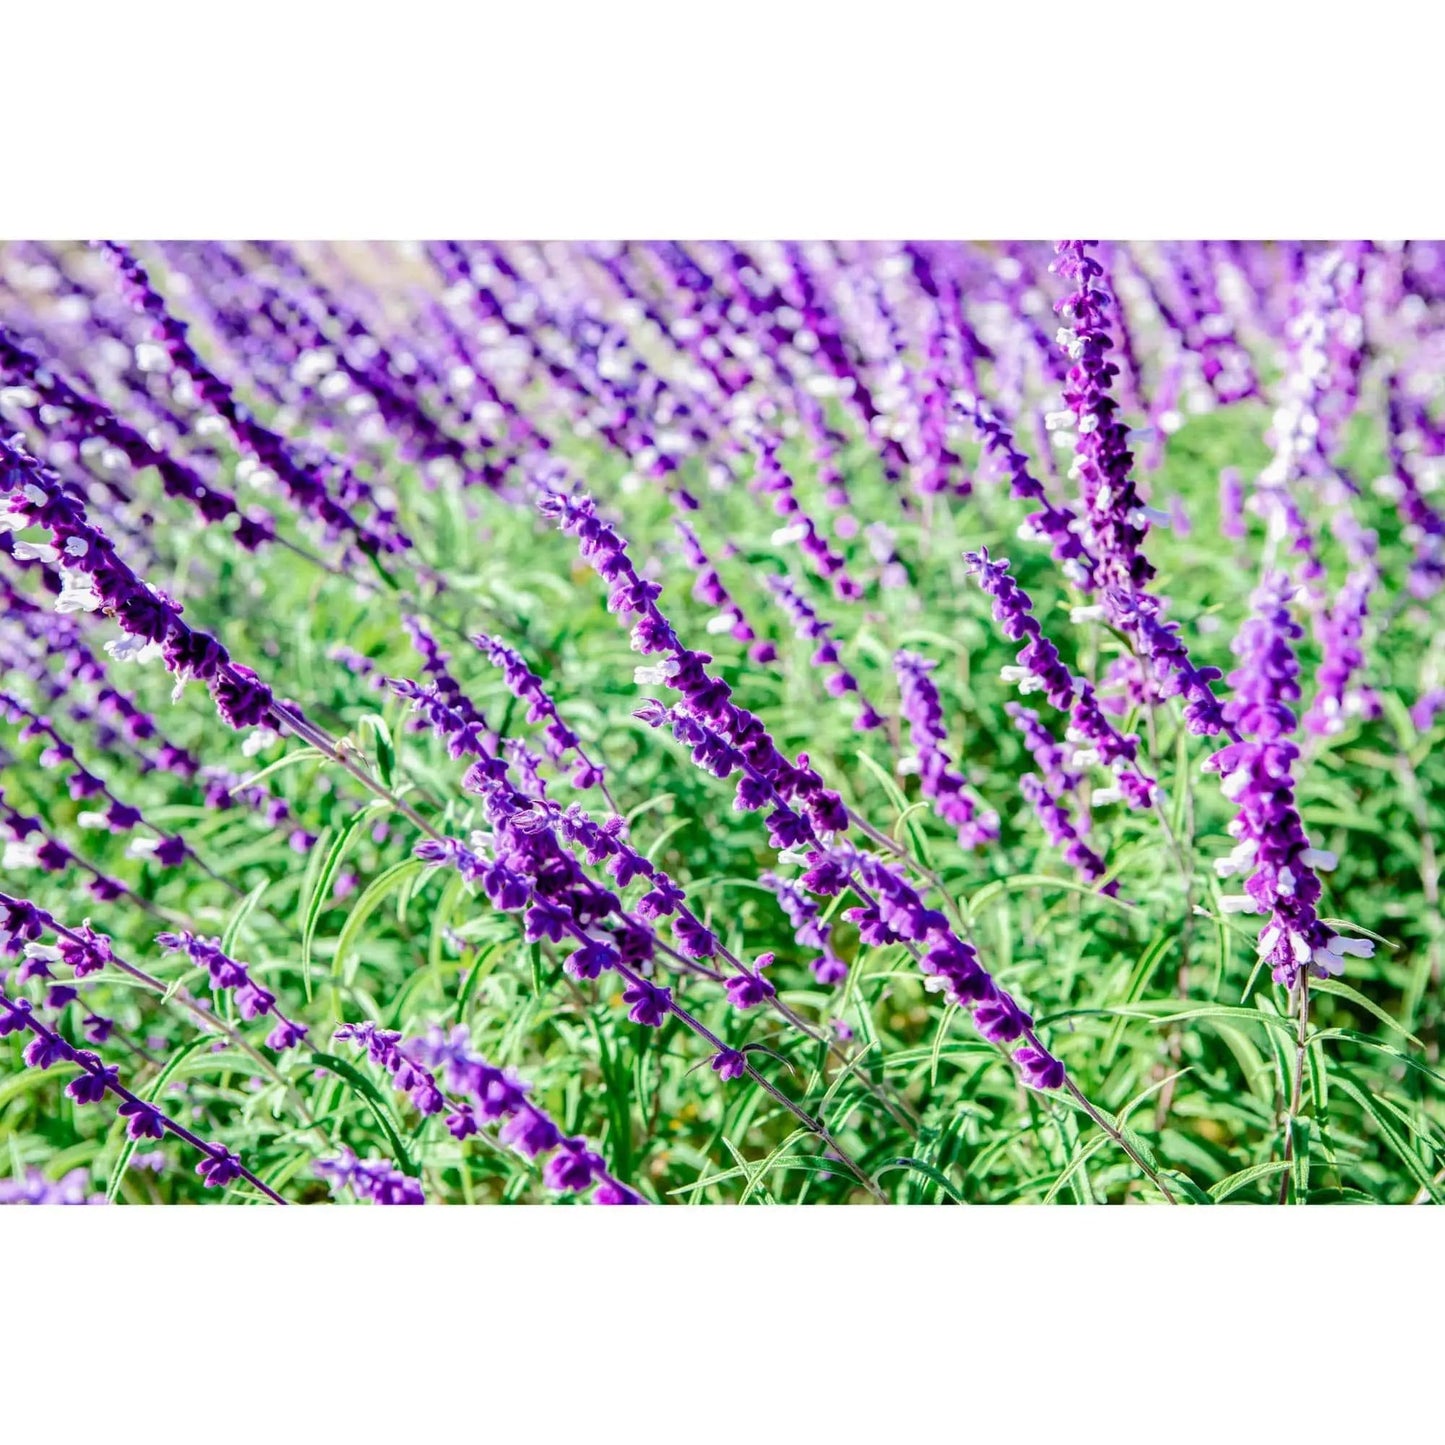 Landscape art of purple lavender in bloom